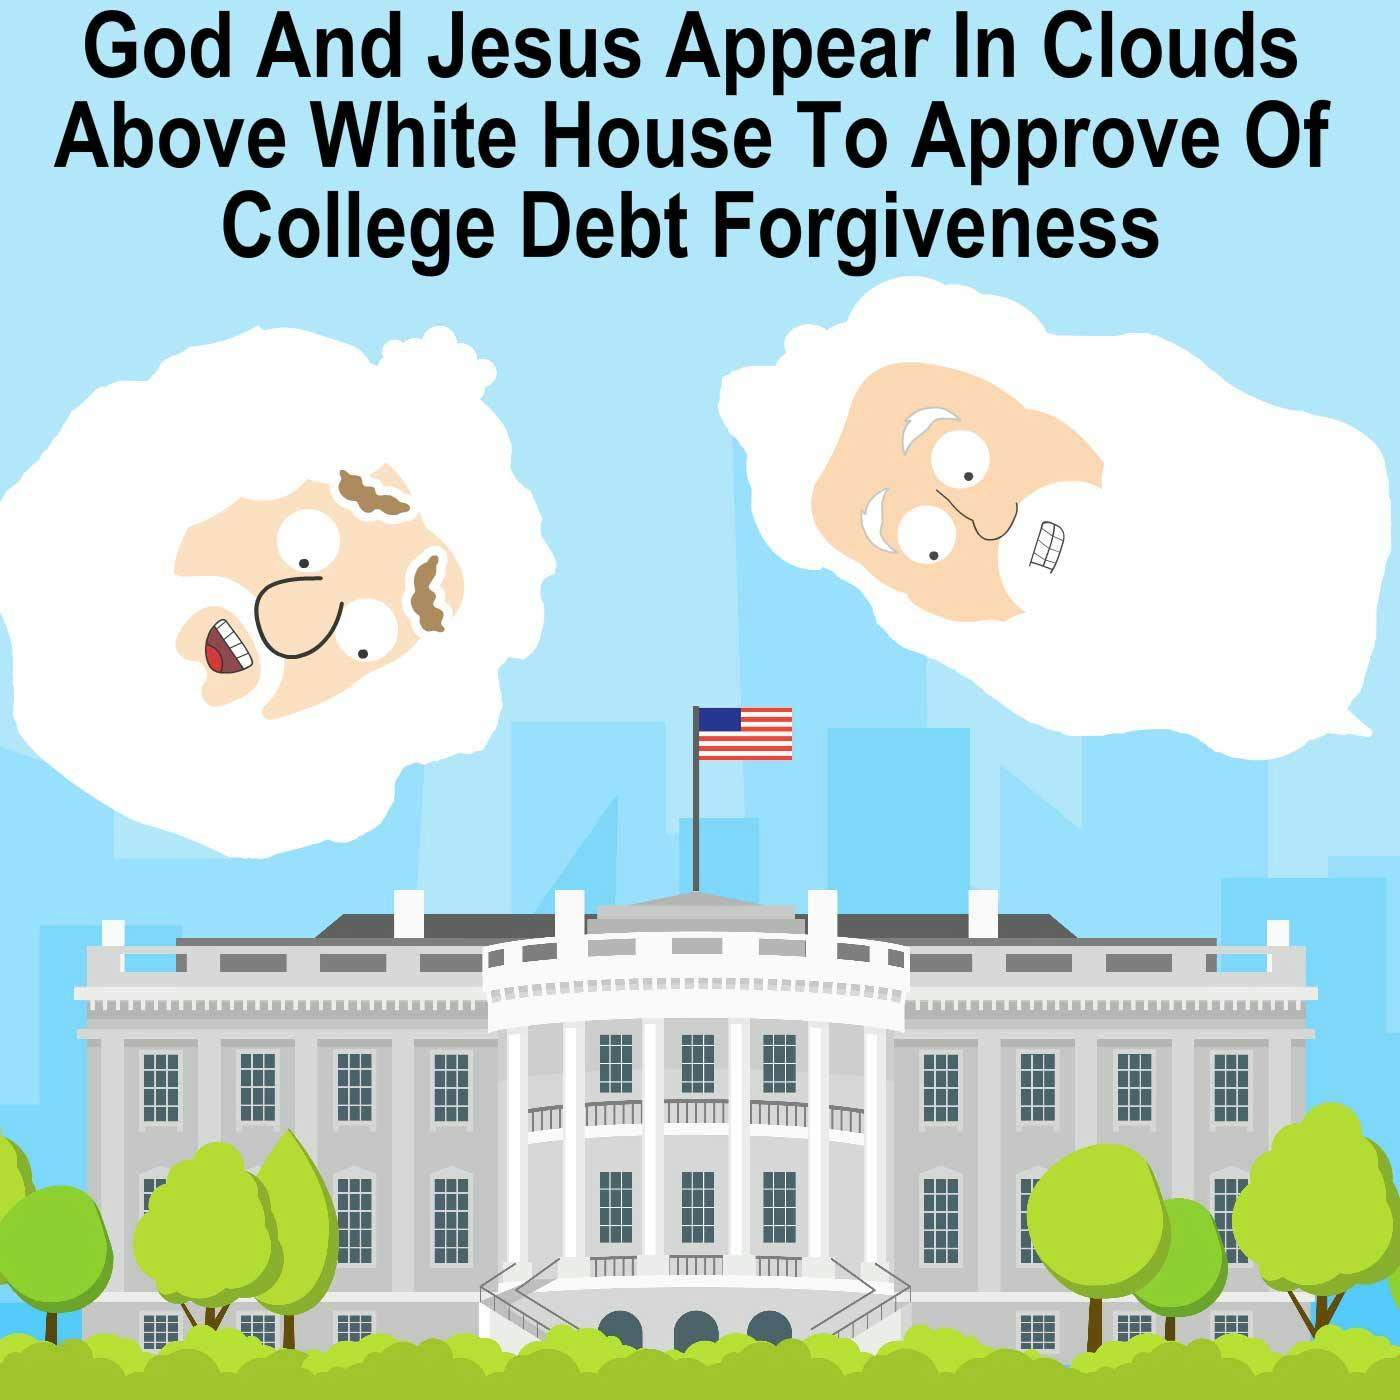 Forgive Us Our College Debts